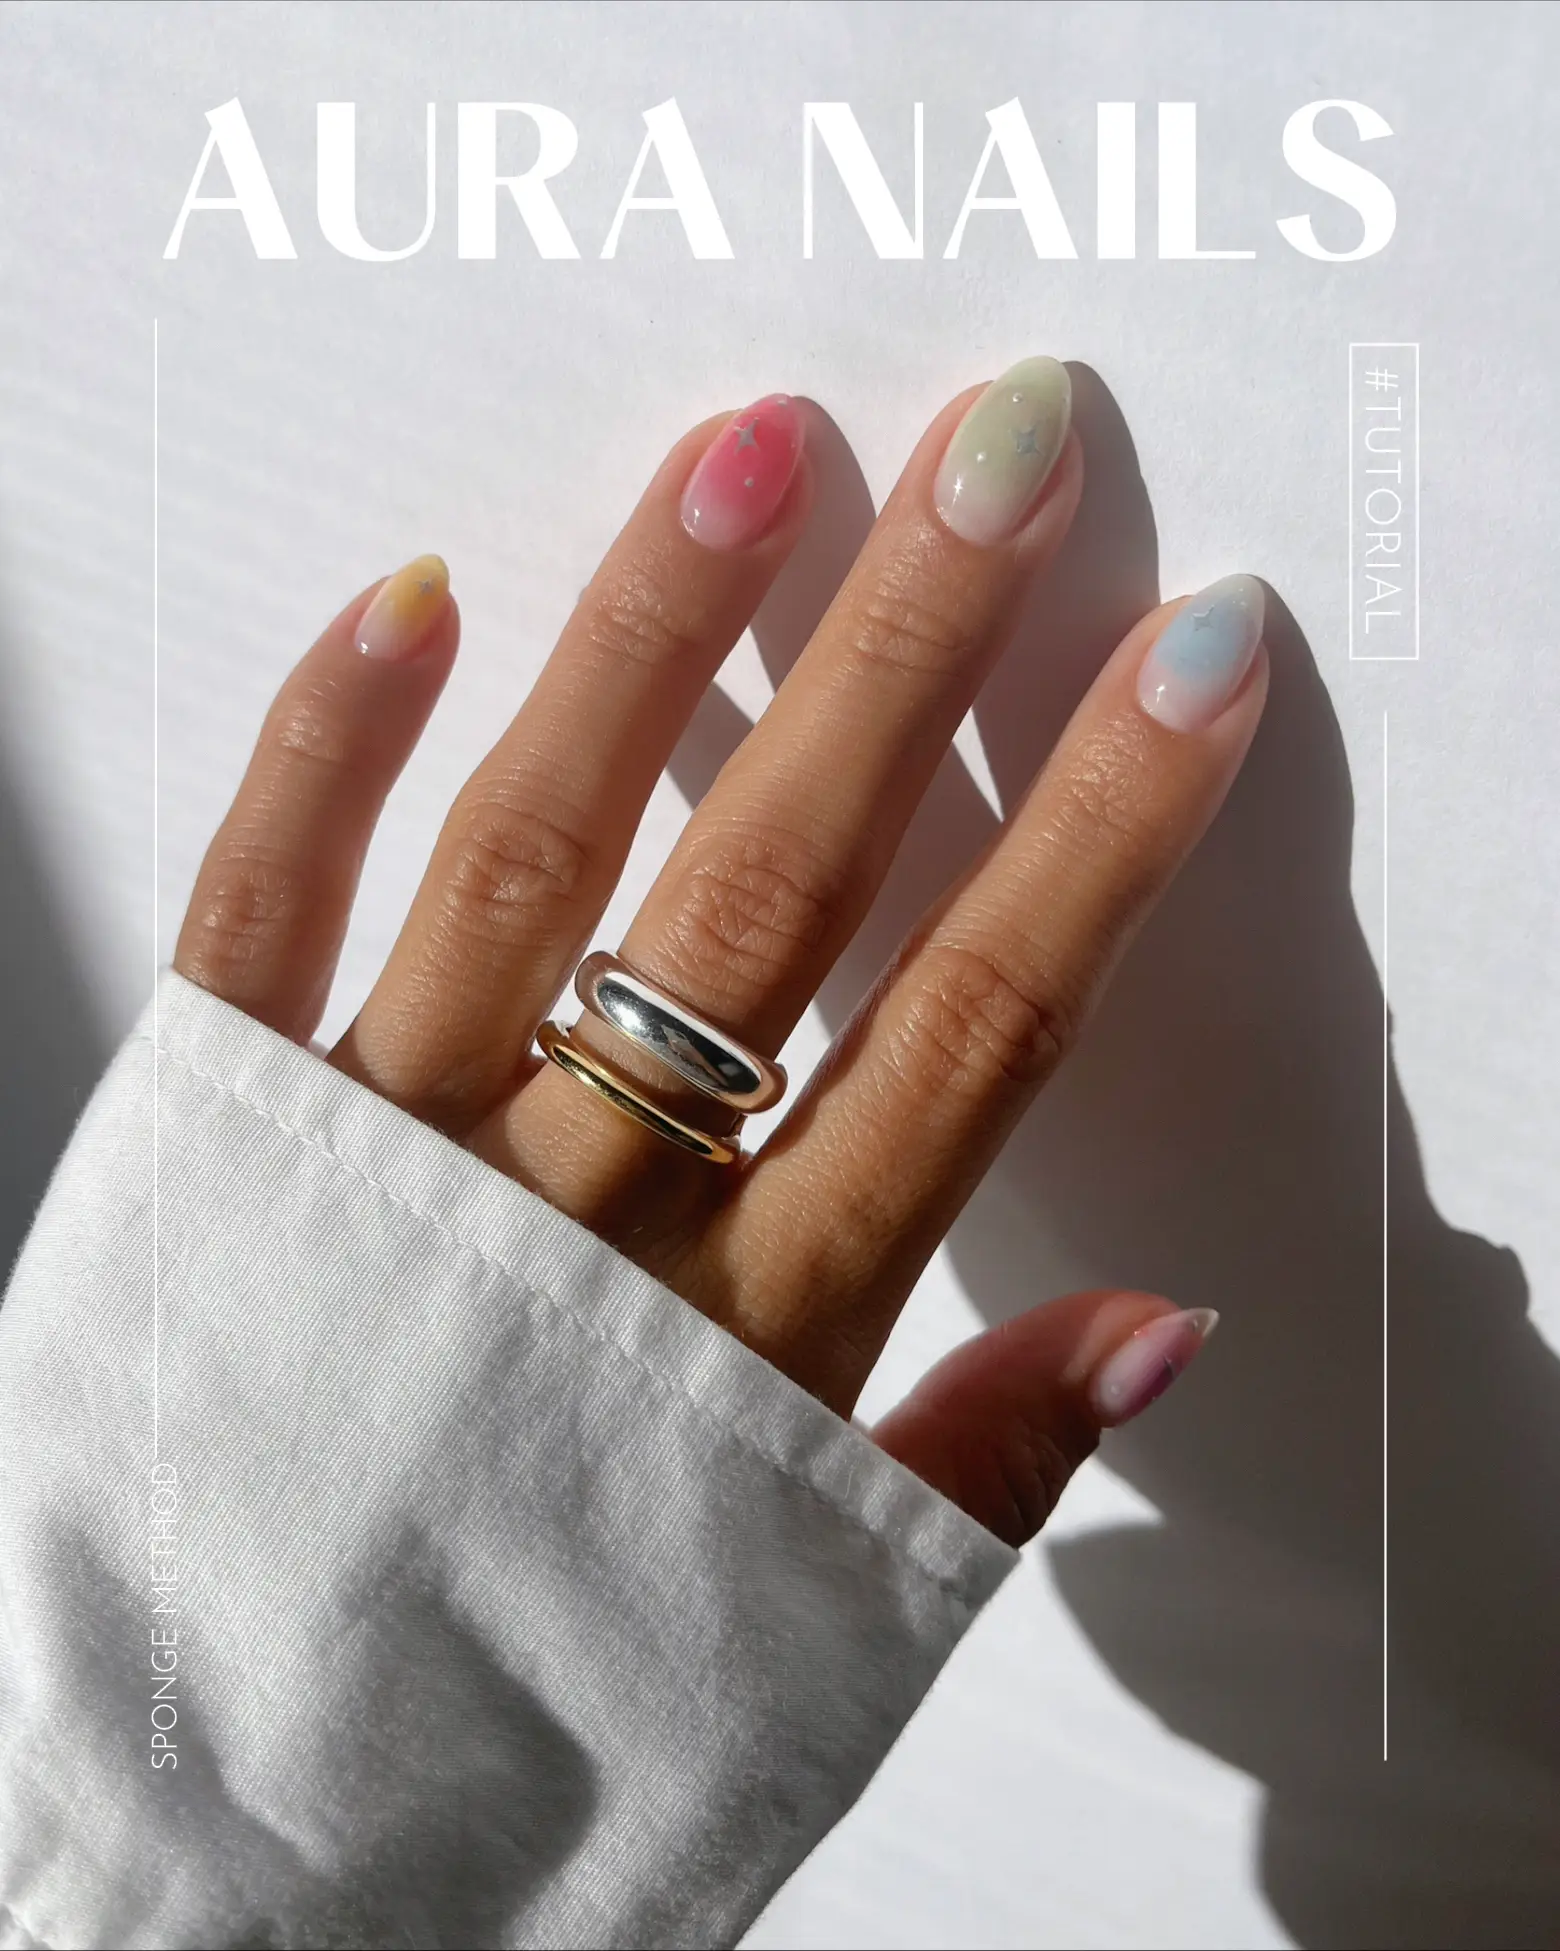 21 Aura Nails Design Ideas We're Loving + Full Tutorial Guide